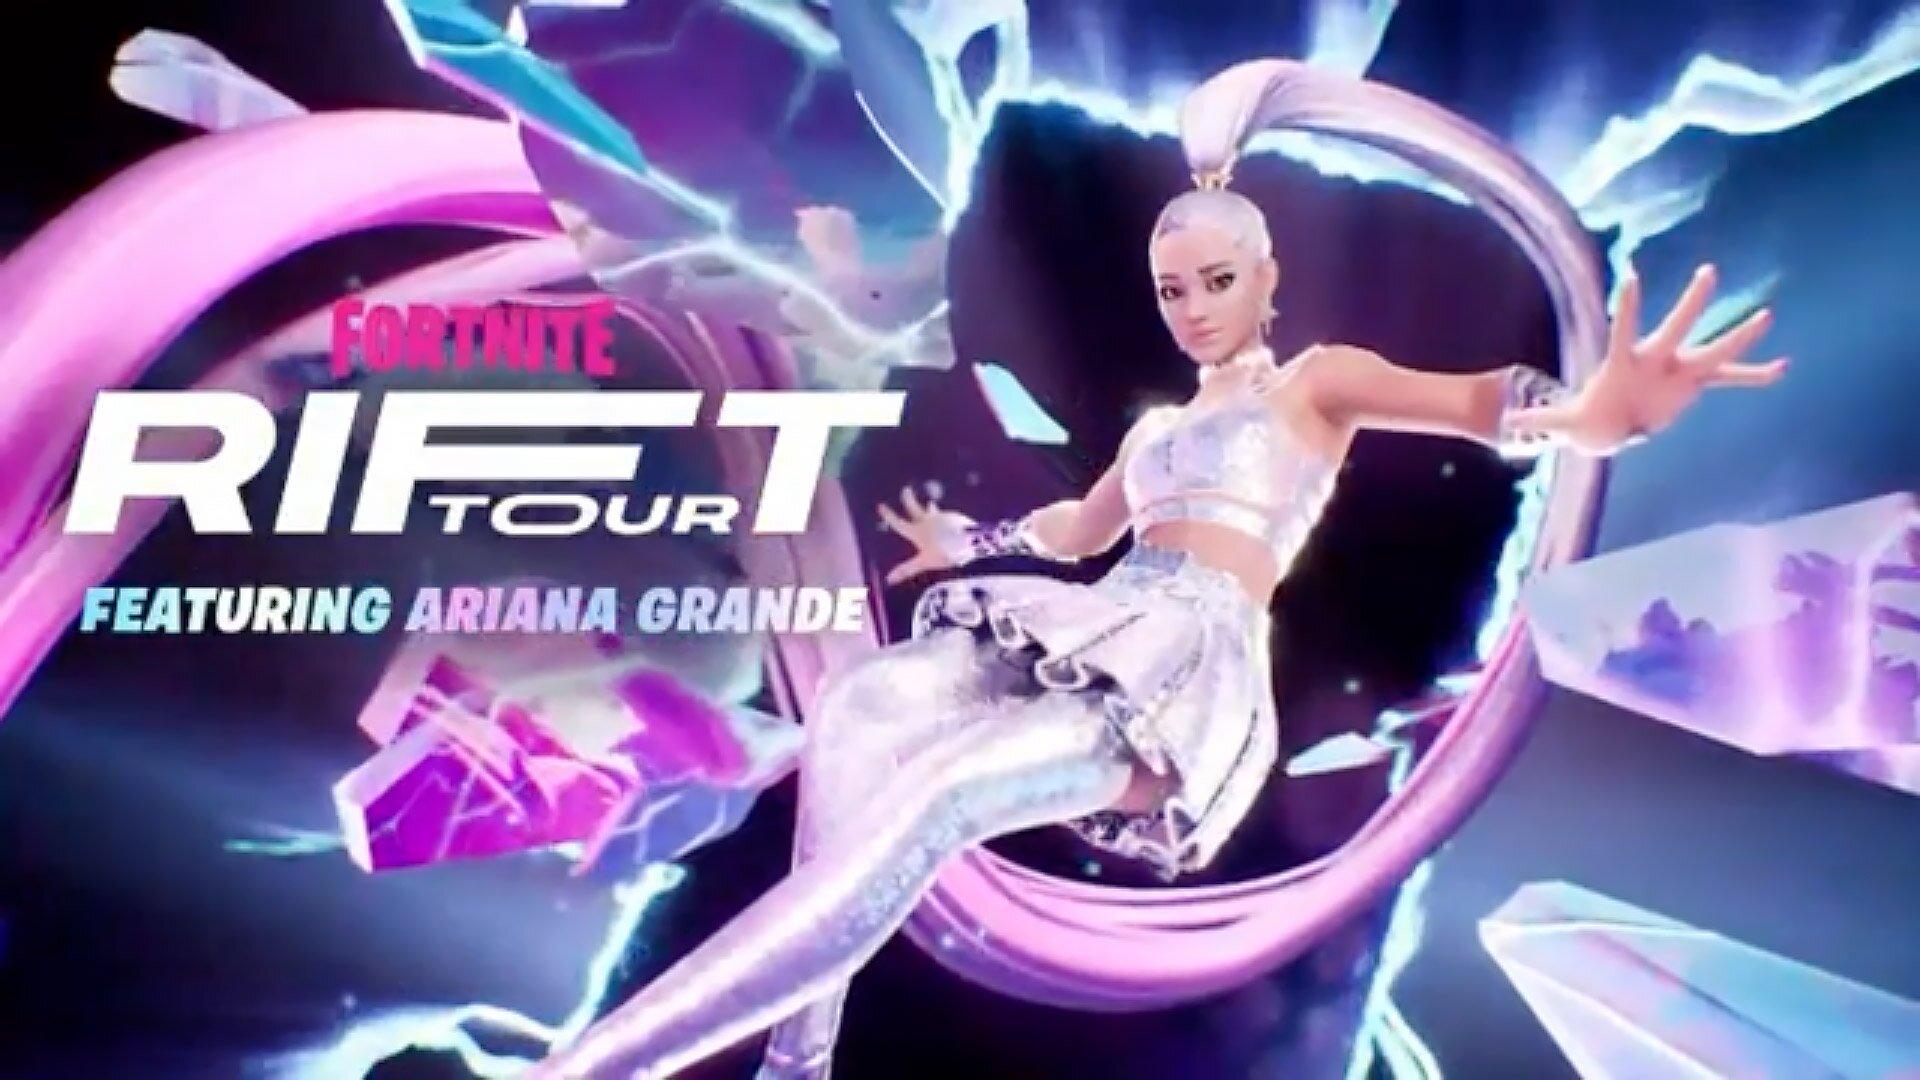 Ariana Grande To Headline Fortnite 's In Game 'Rift Tour' Concert Series